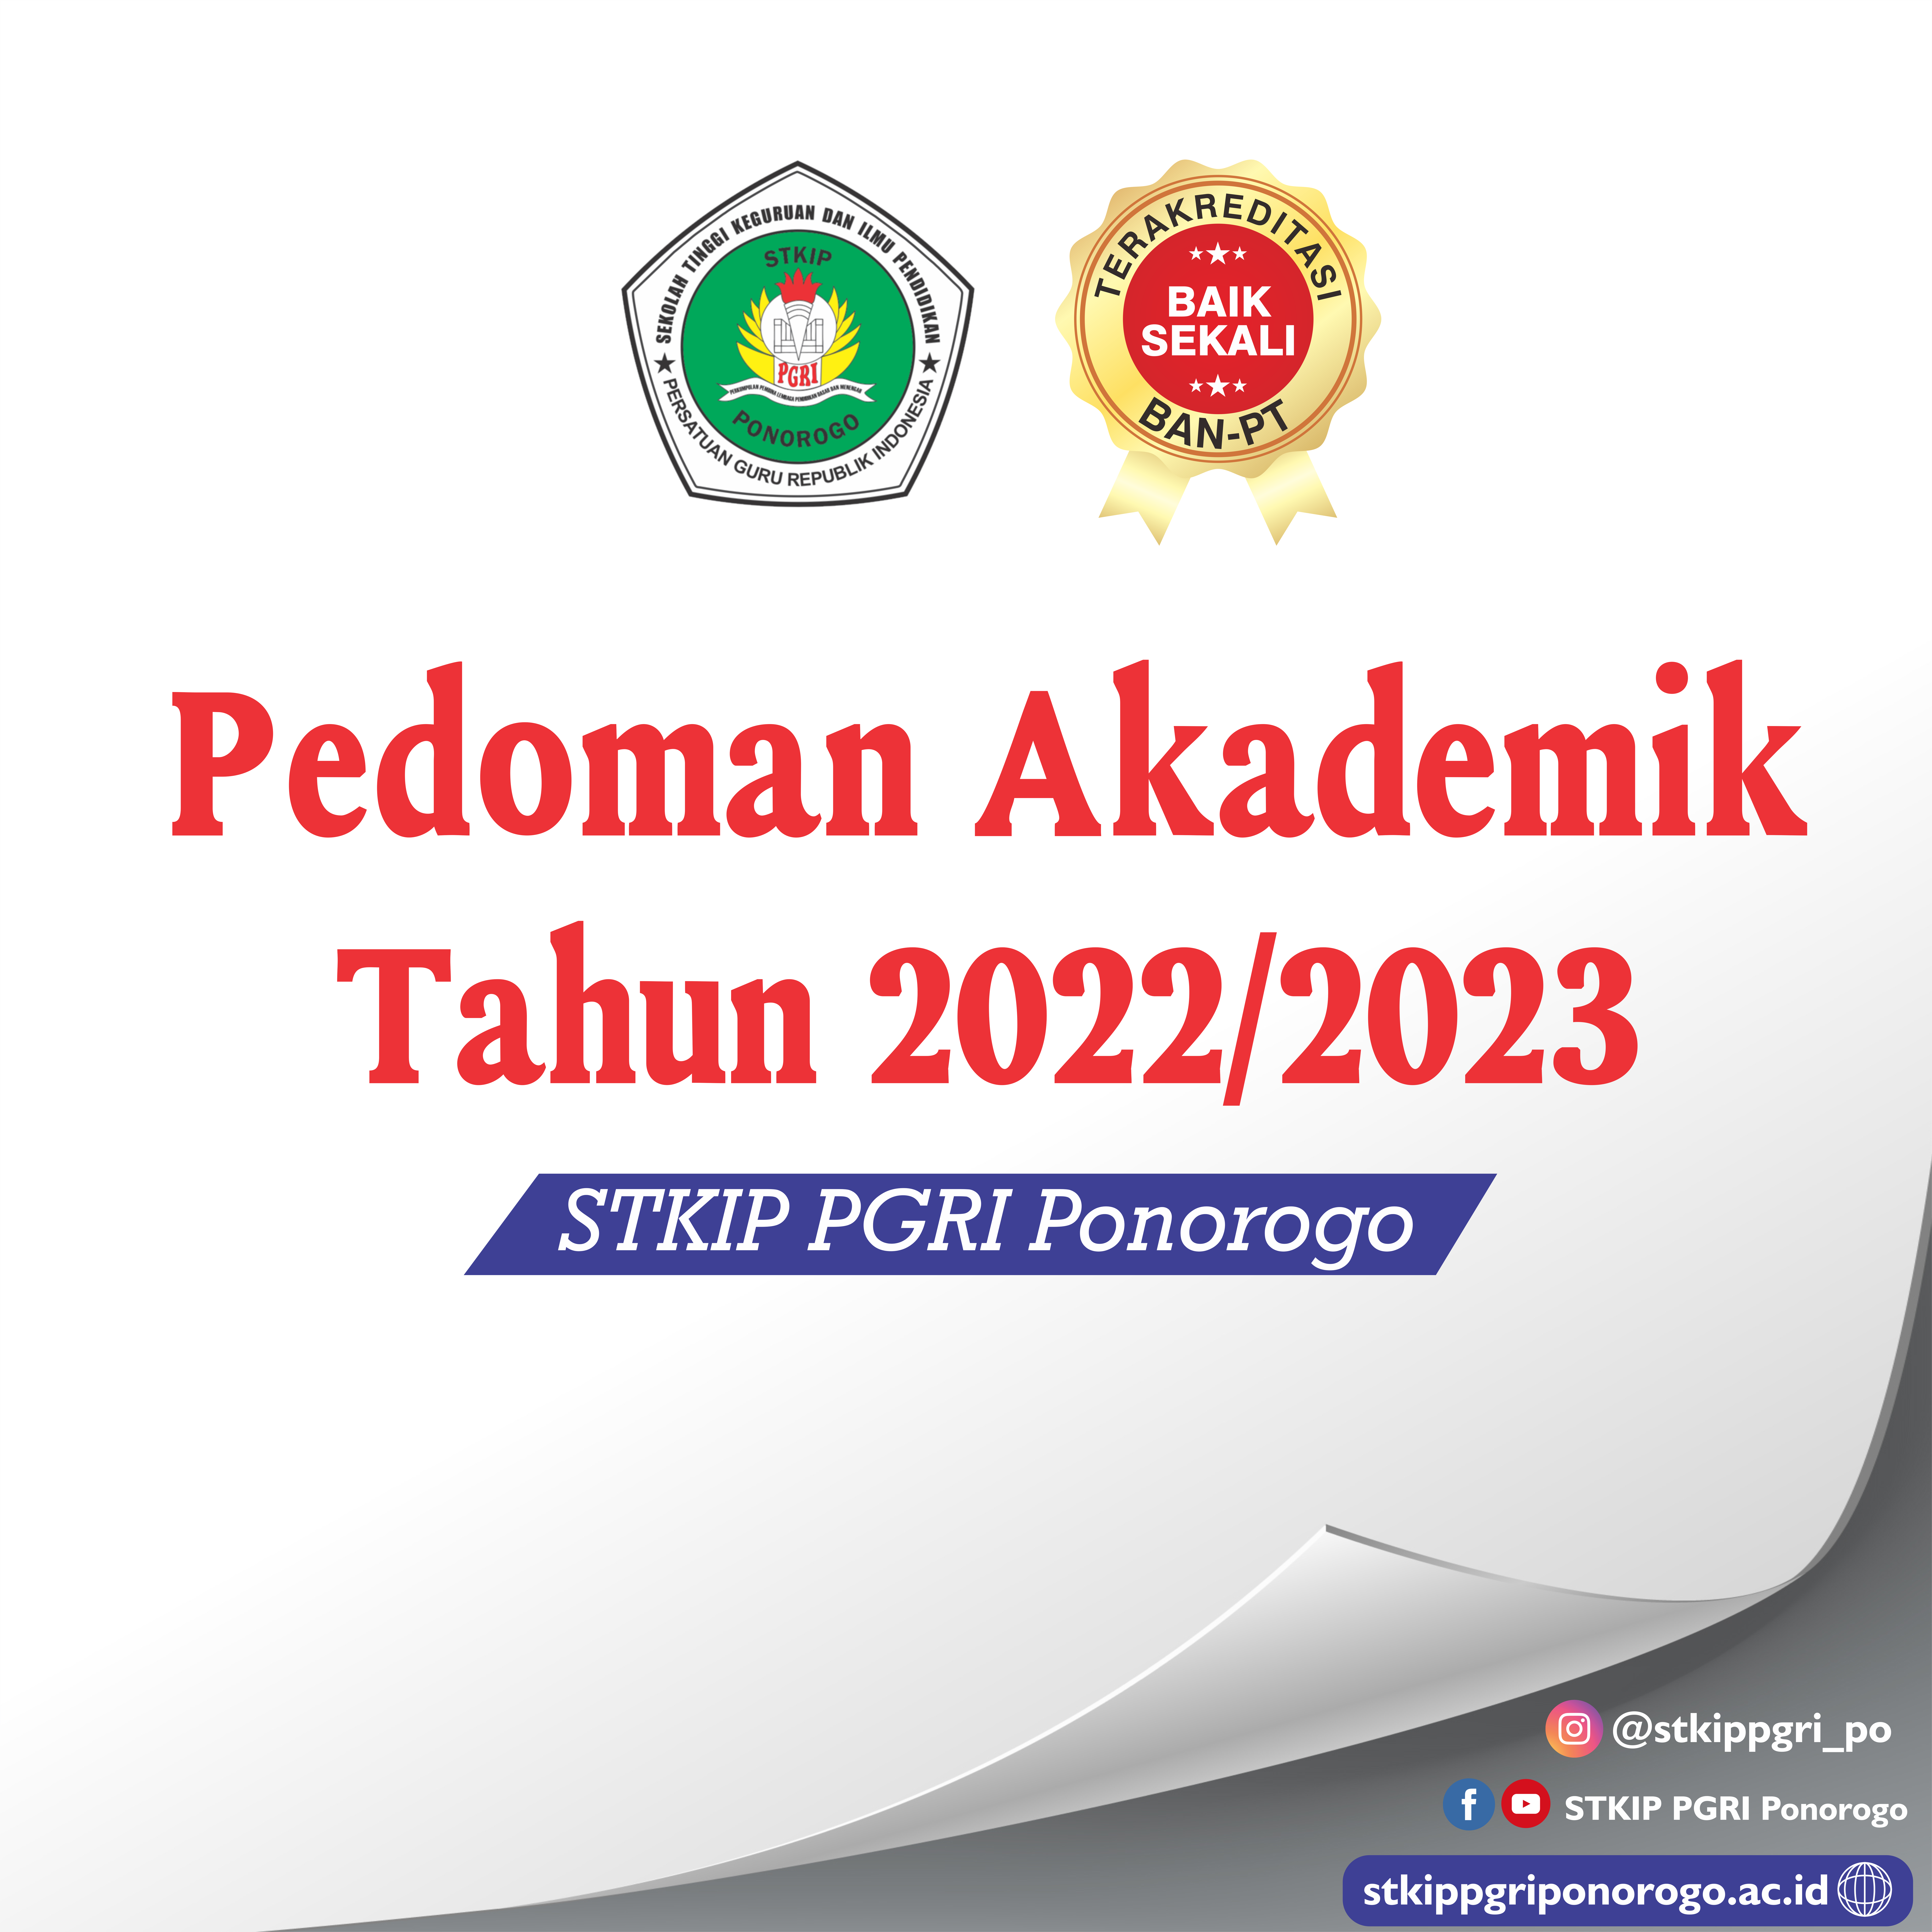 Pedoman Akademik Tahun 2022/2023